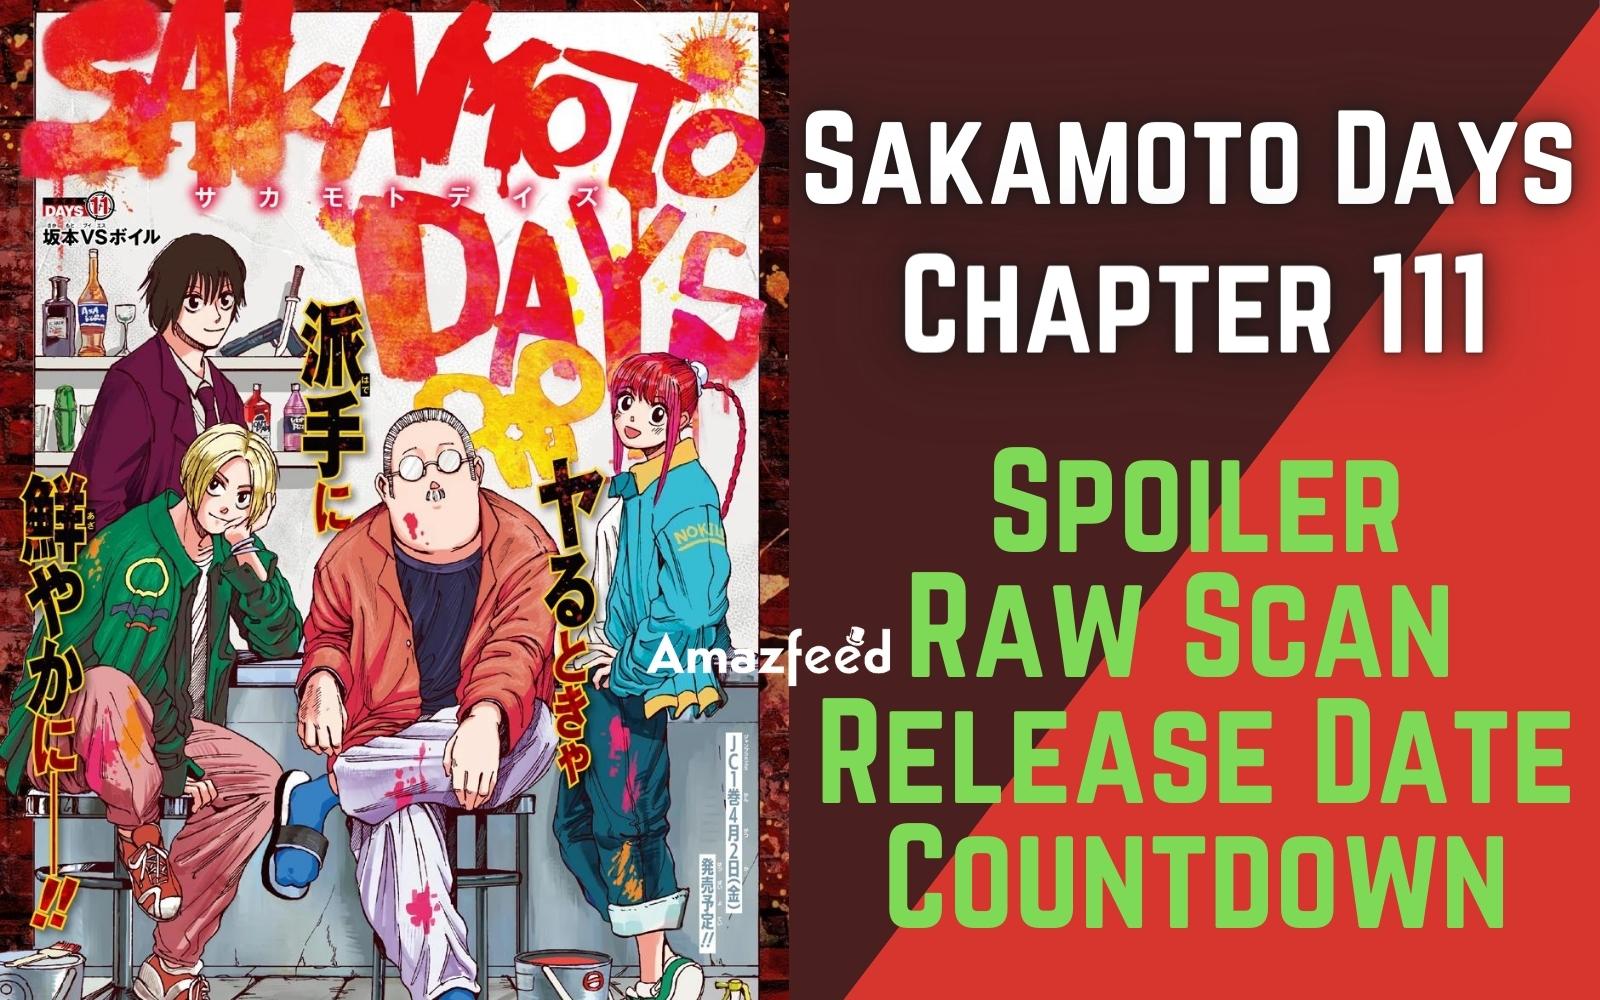 Tensei Shitara Slime Datta Ken Chapter 112 Reddit Spoiler, Raw Scan, Color  Page, Release Date » Amazfeed